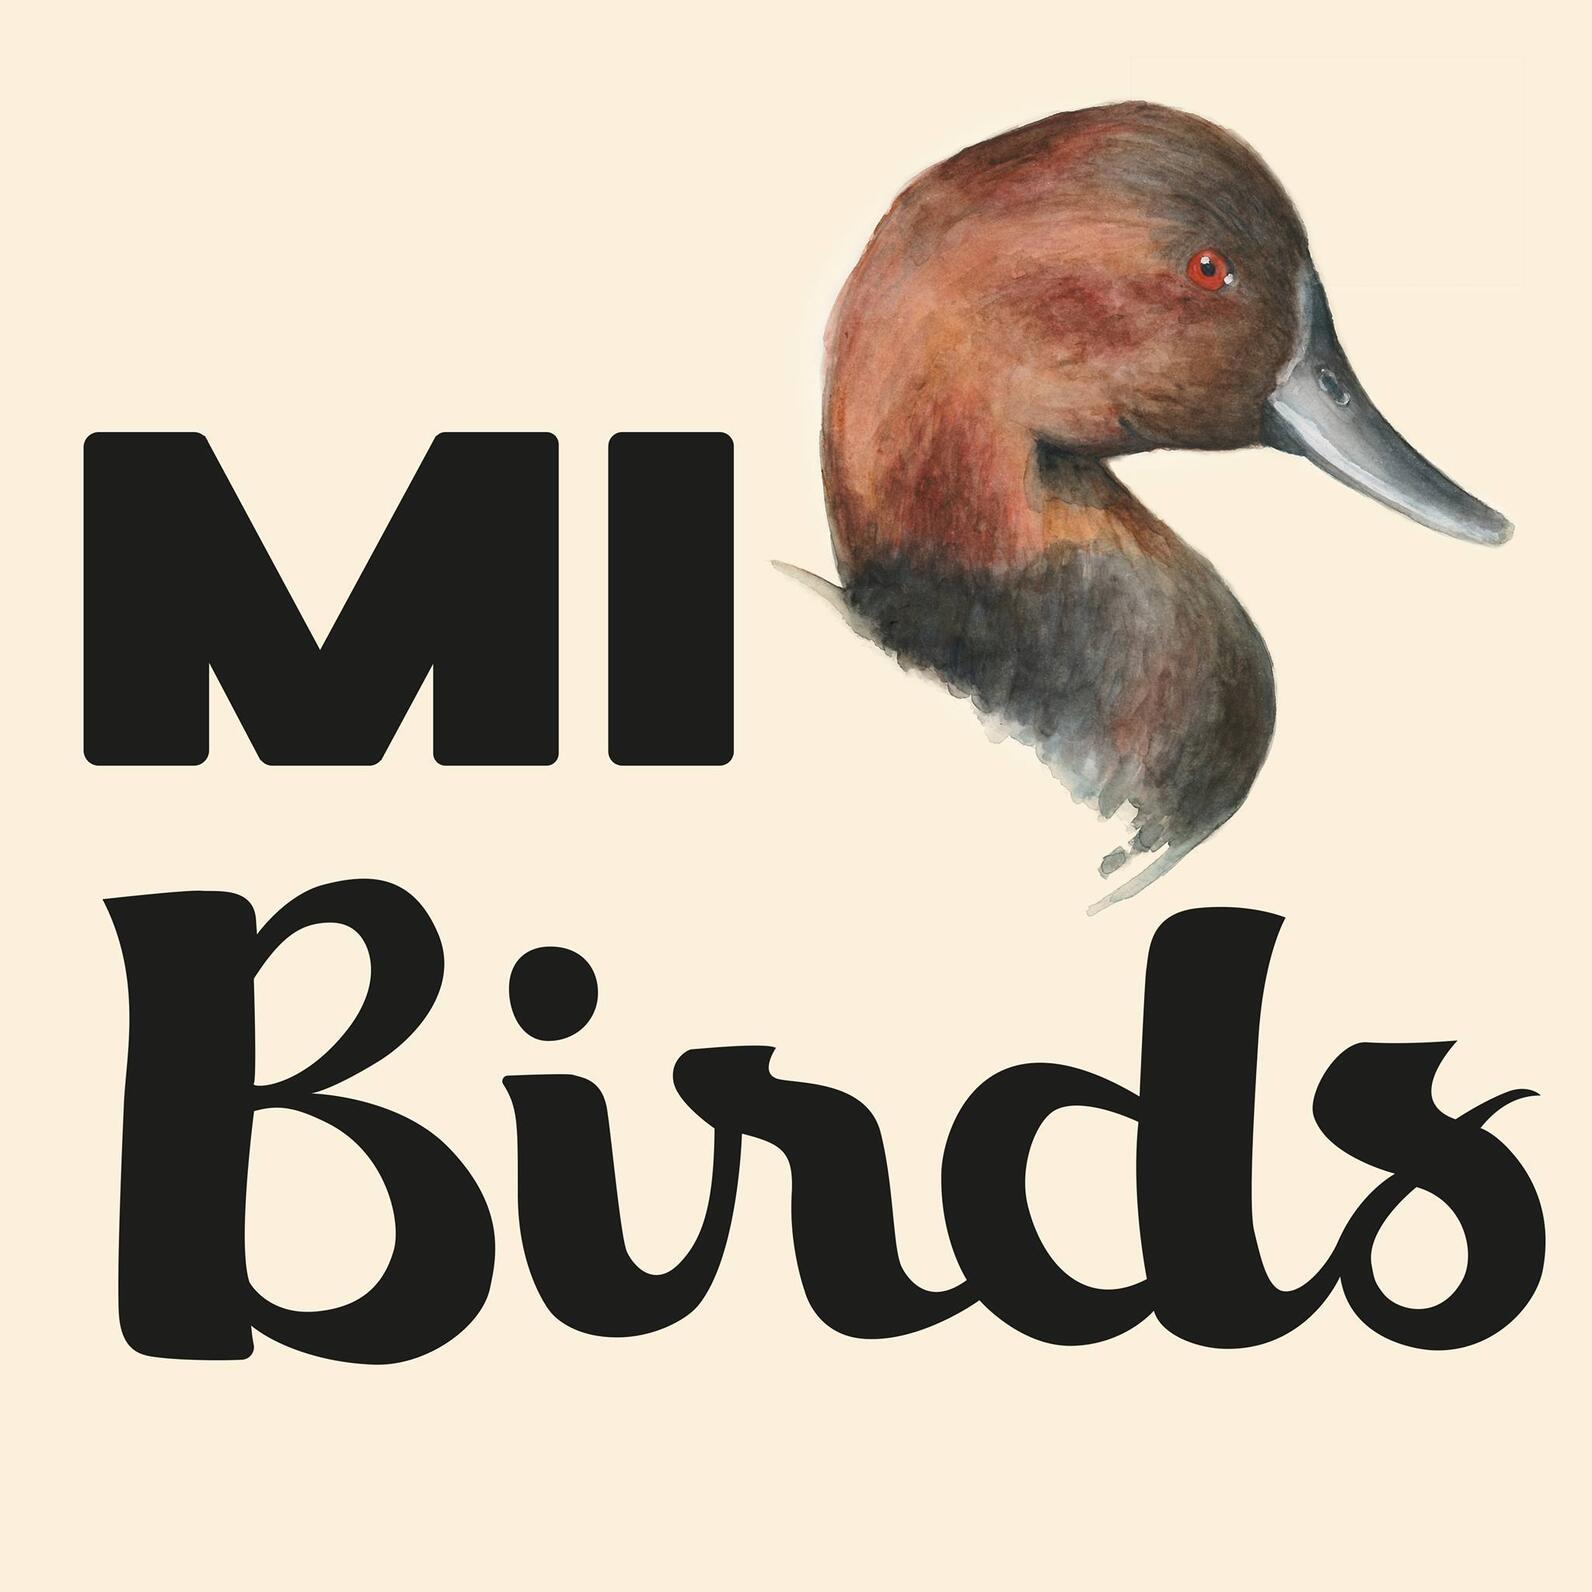 Canvasback Duck MI Birds logo.